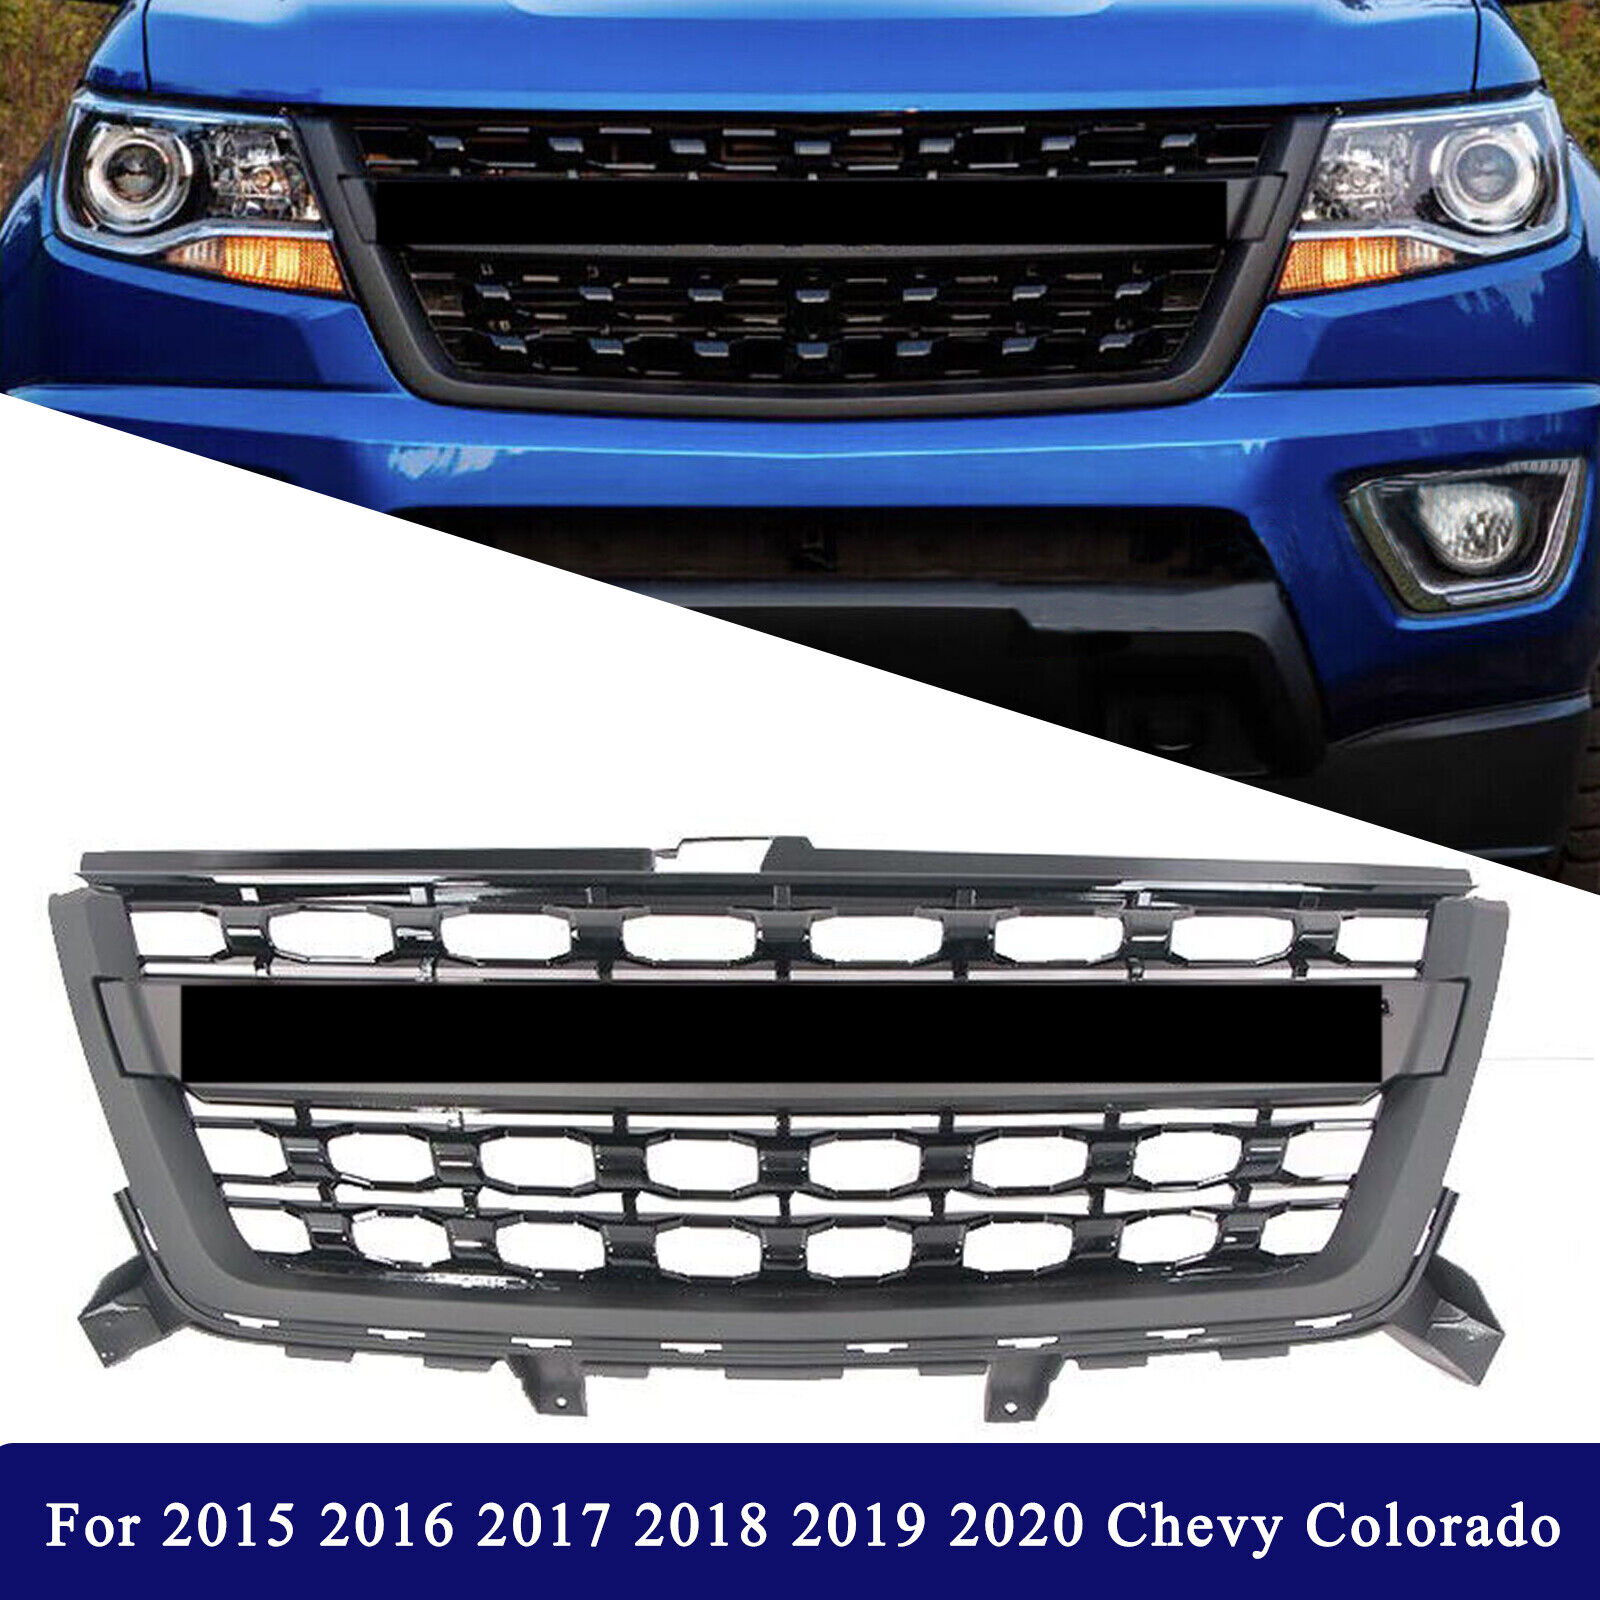 Front Grille Fit For Chevrolet Colorado 2015-2020 W/ Chevrolet Script Black